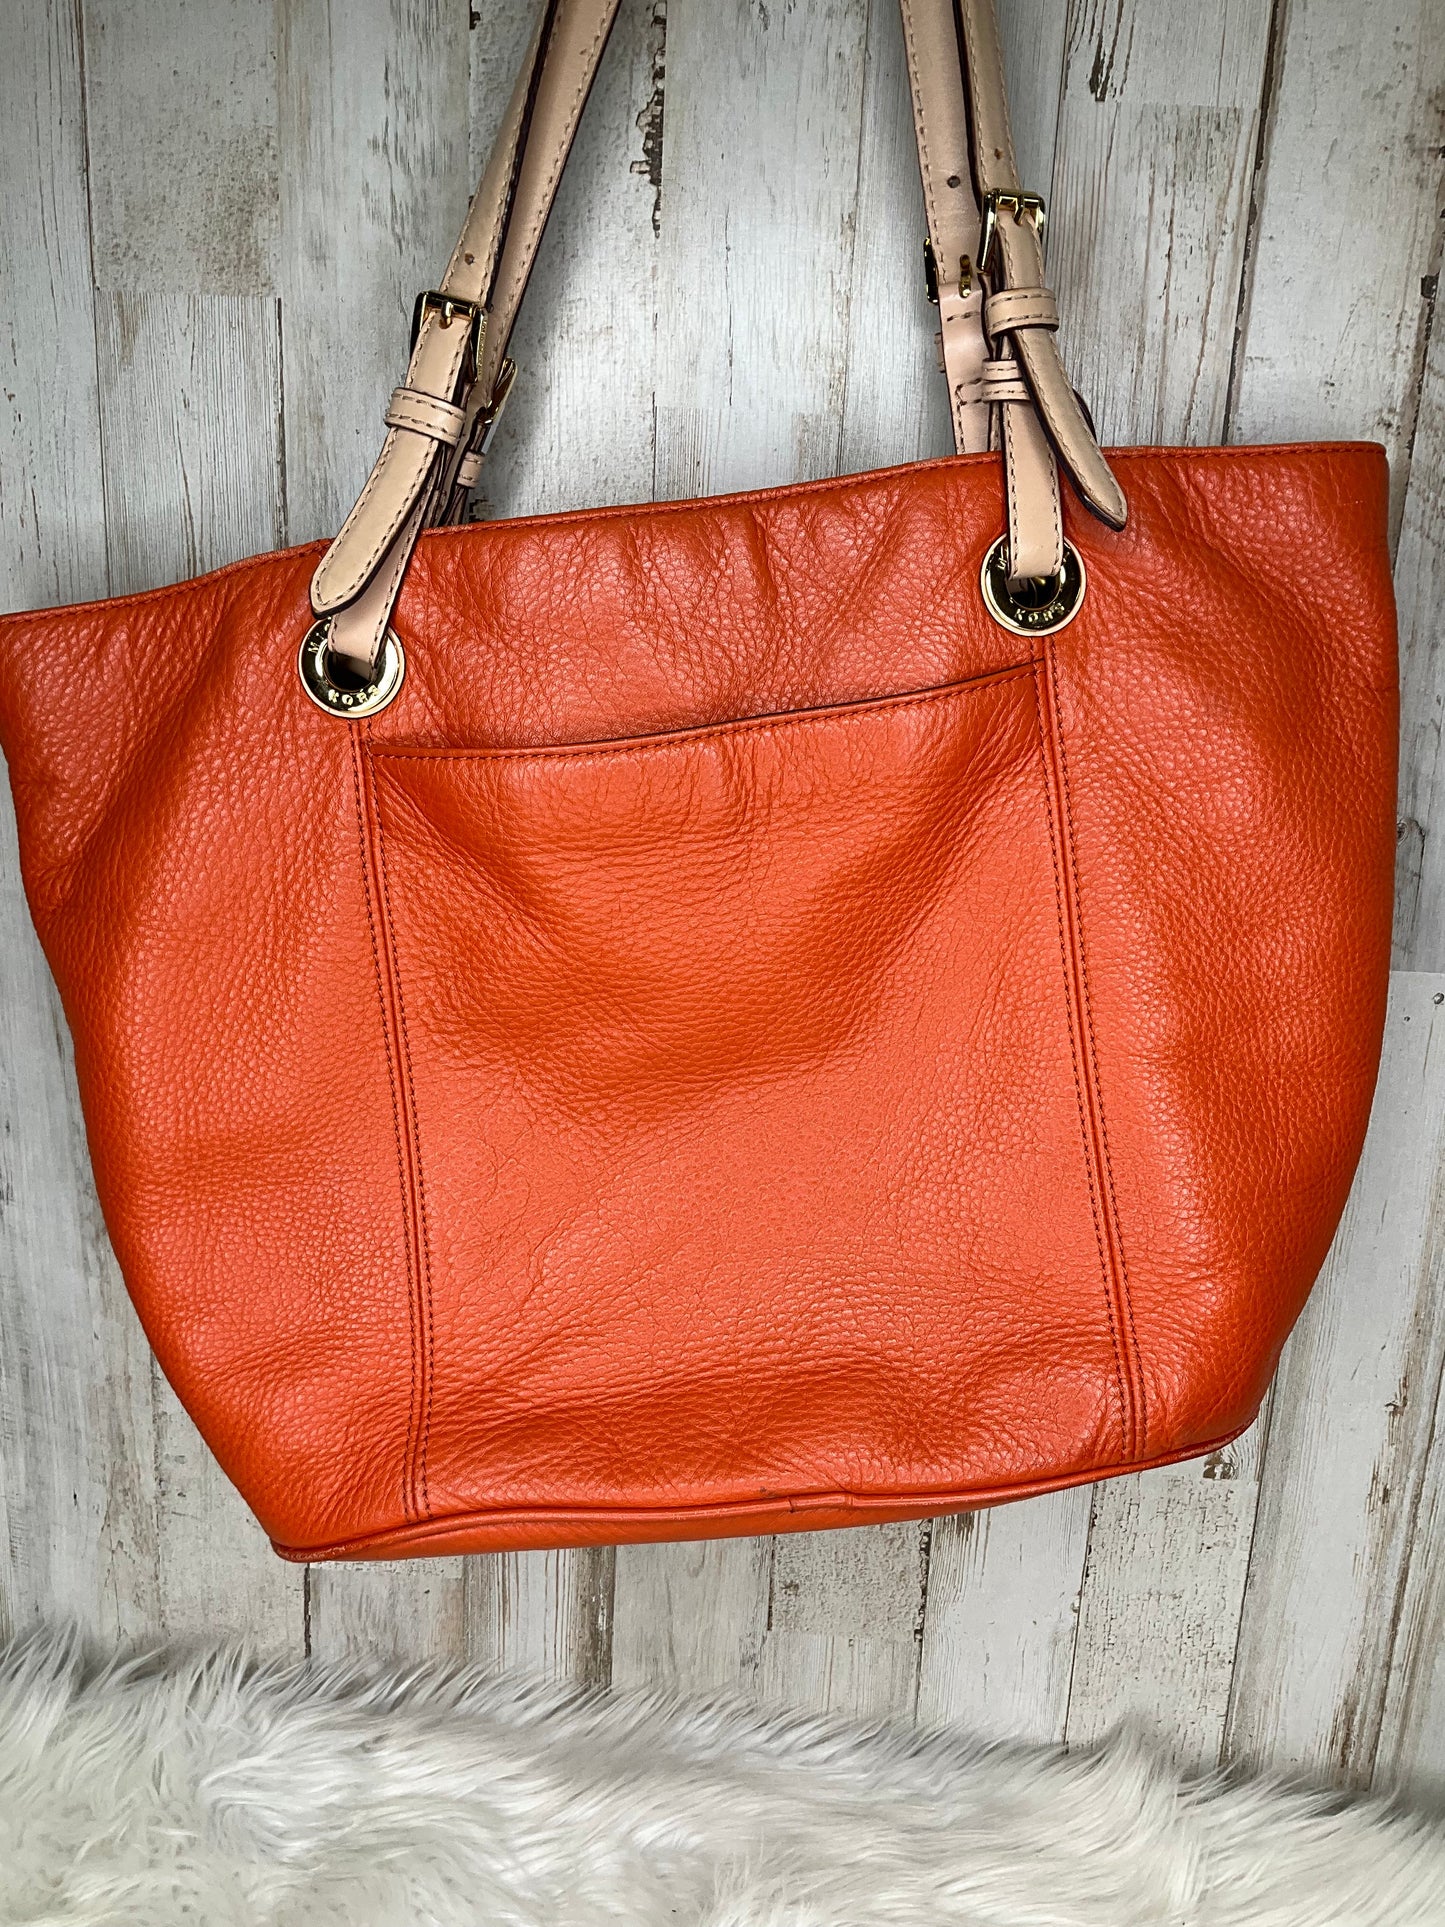 Orange Handbag Designer Michael Kors, Size Medium